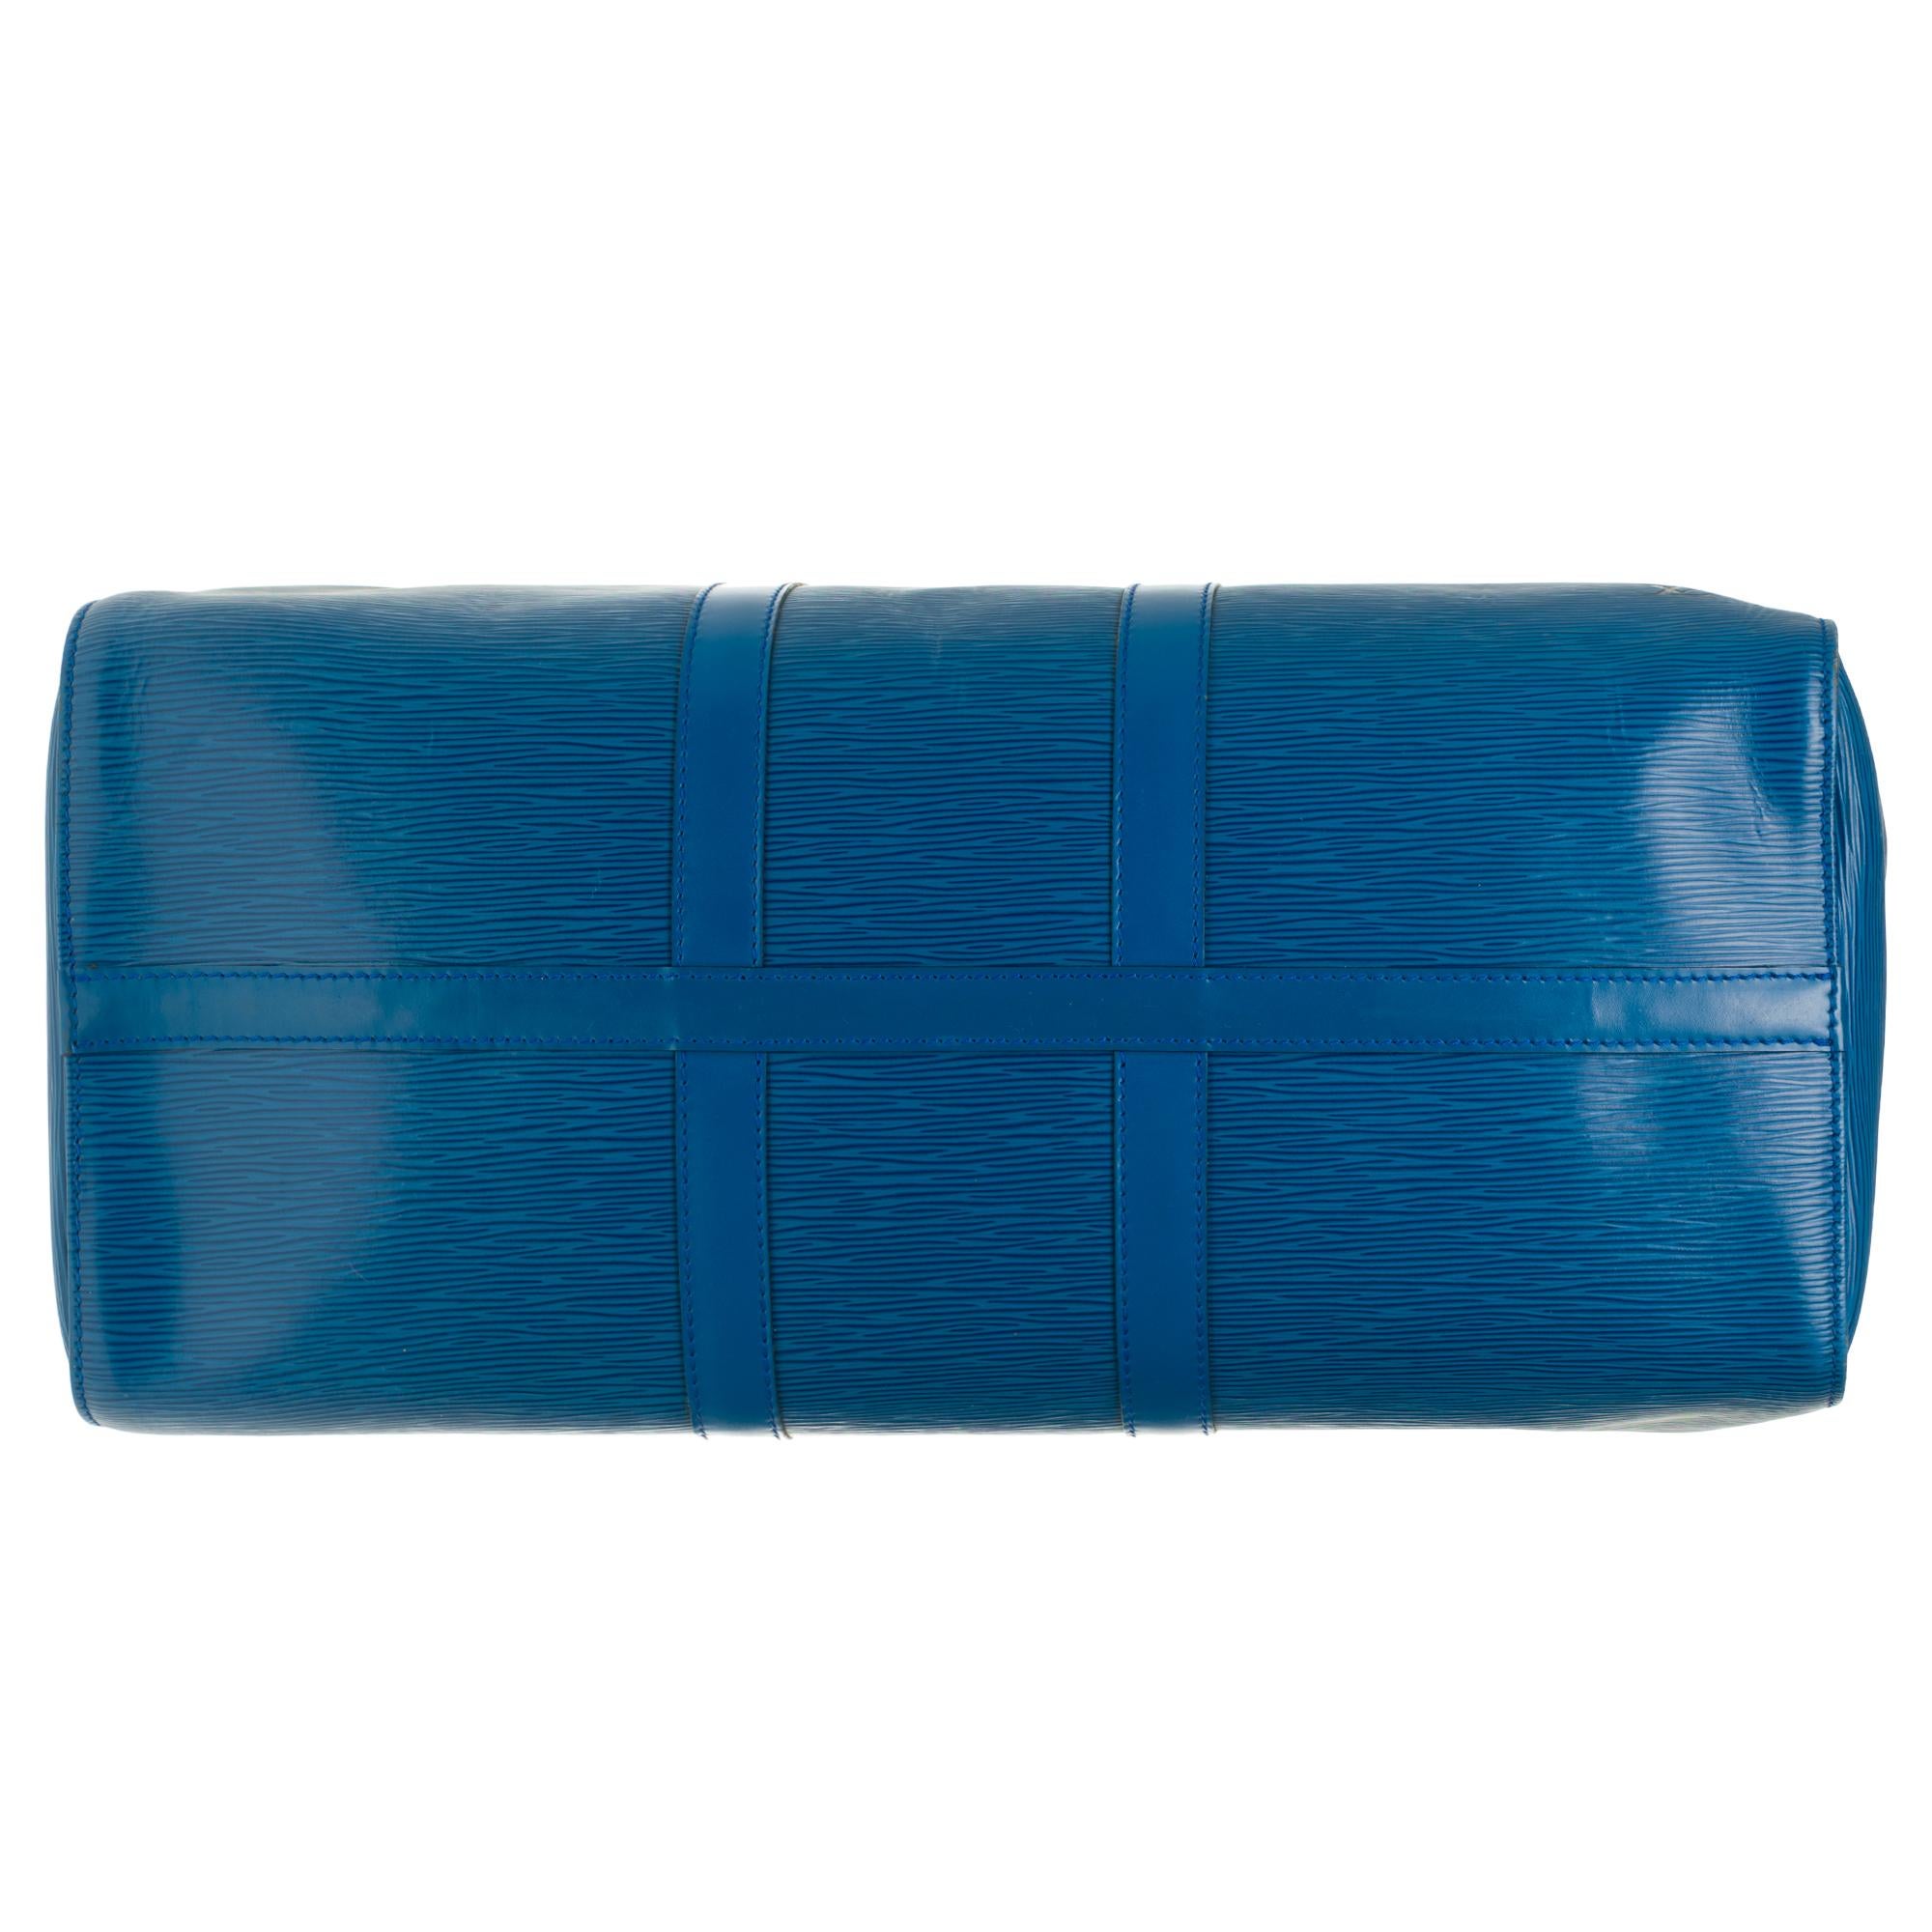 Louis Vuitton Keepall 45 Travel bag in blue épi leather 1